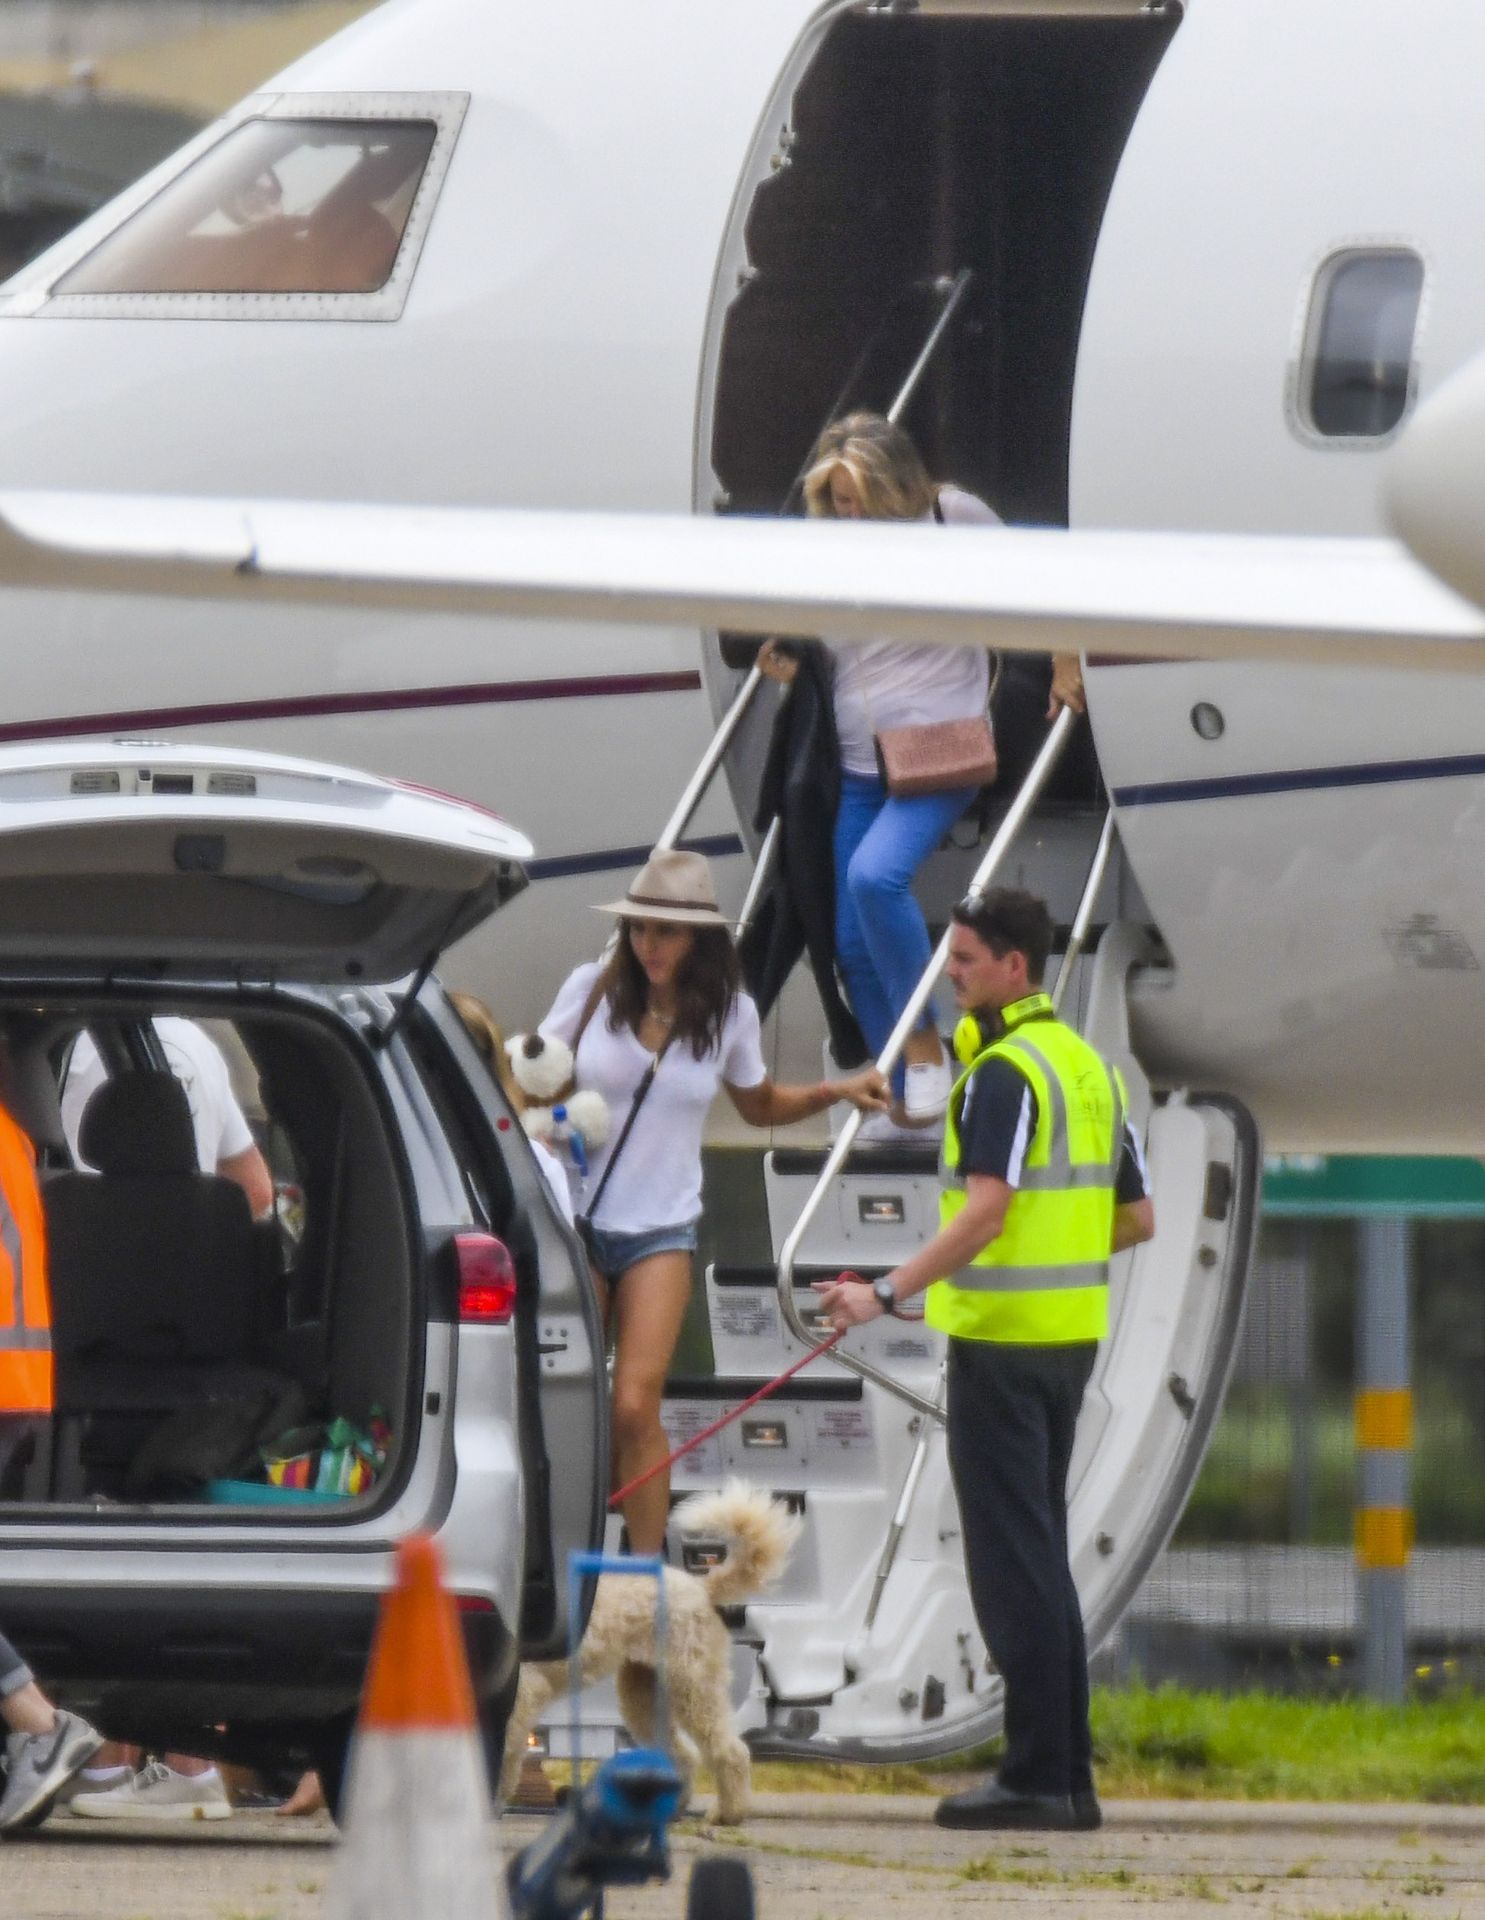 Chris Hemsworth  Elsa Pataky Arrive in Sydney with Their V.I.P. Dogs (11 Photos)